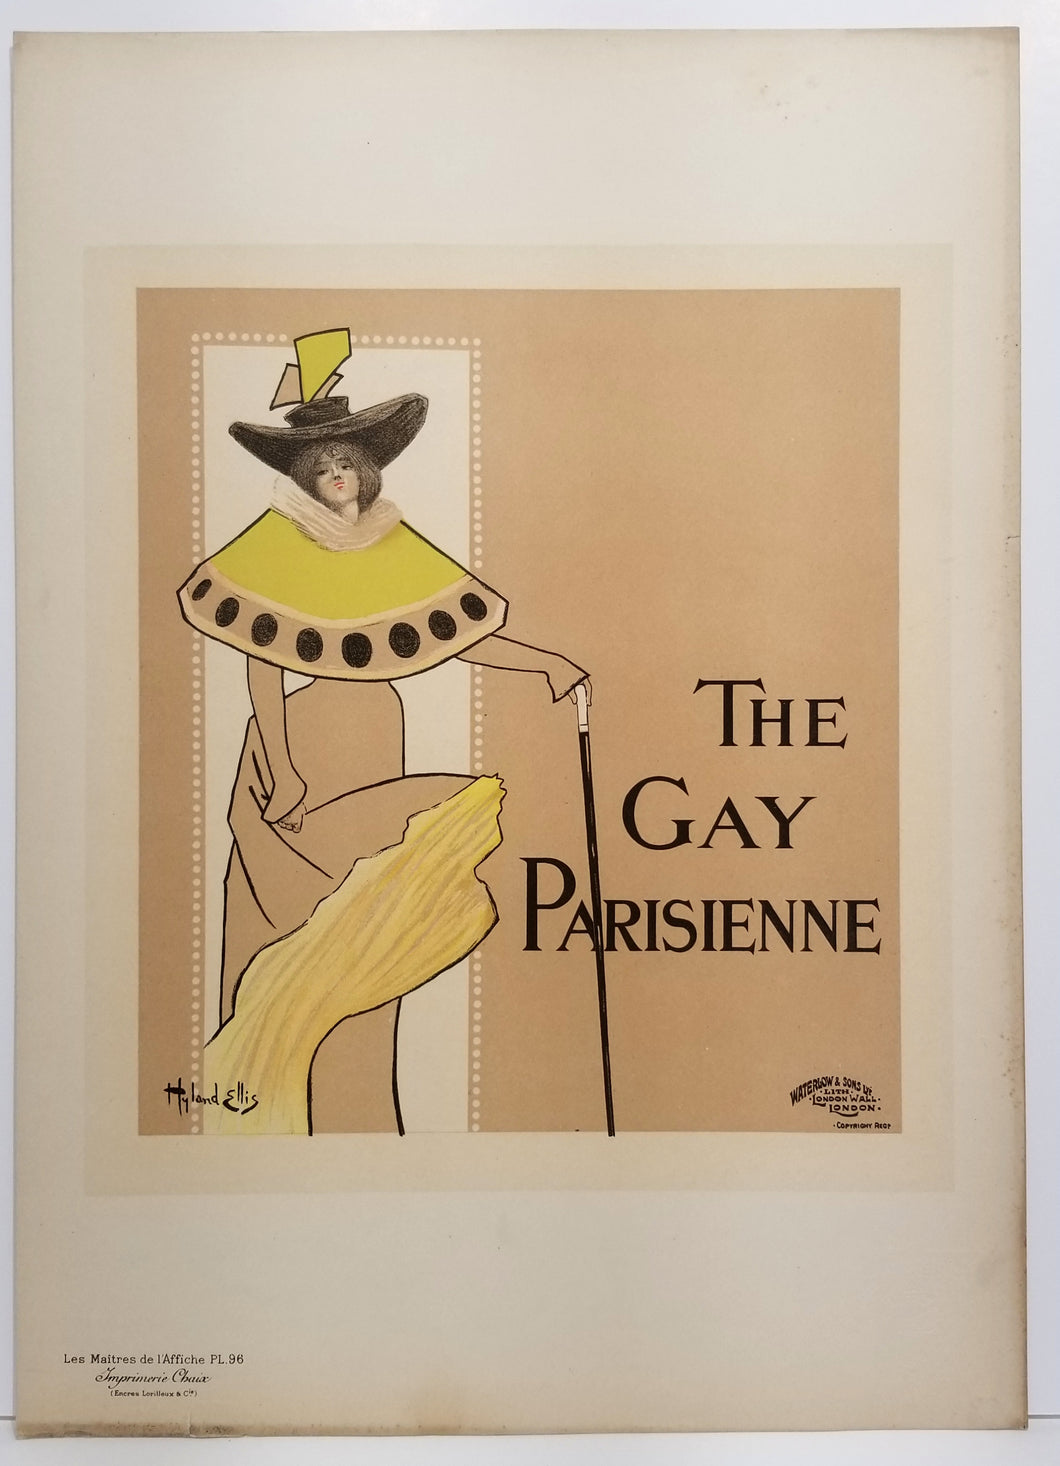 The Gay parisienne. 1897.